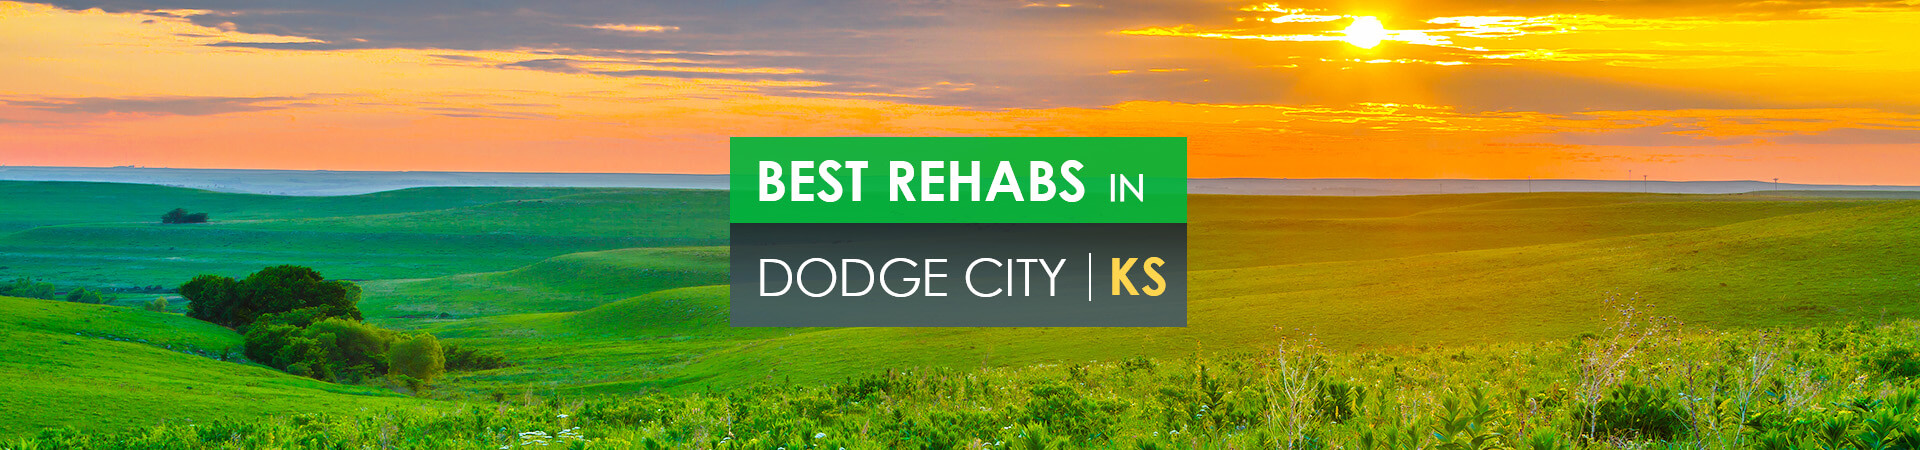 Best rehabs in Dodge City, KS